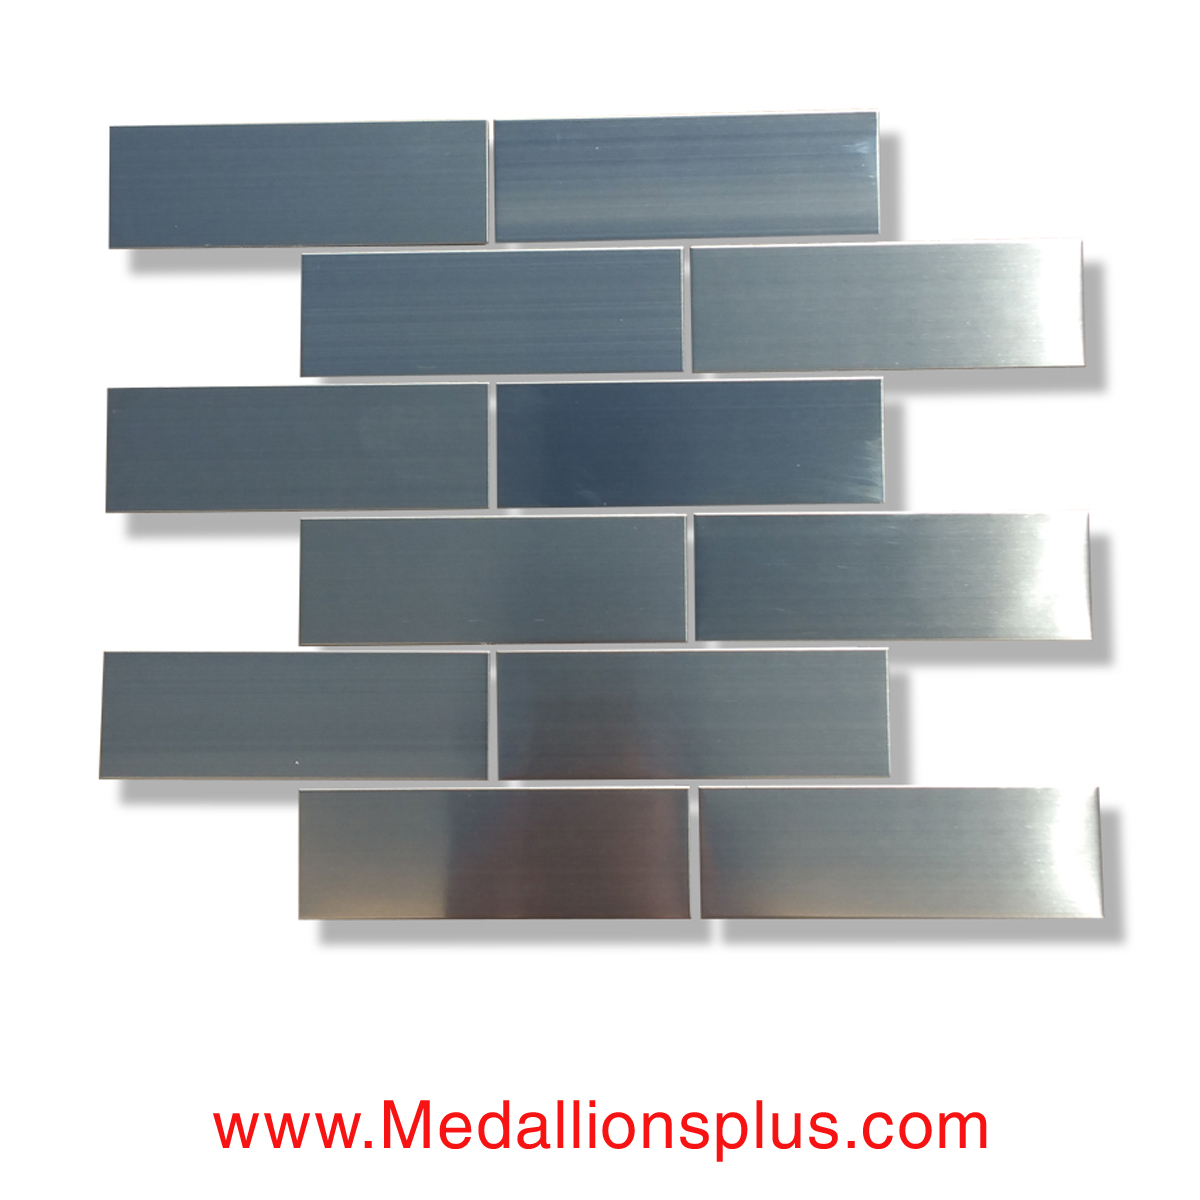 Brick Stainless Steel Tile